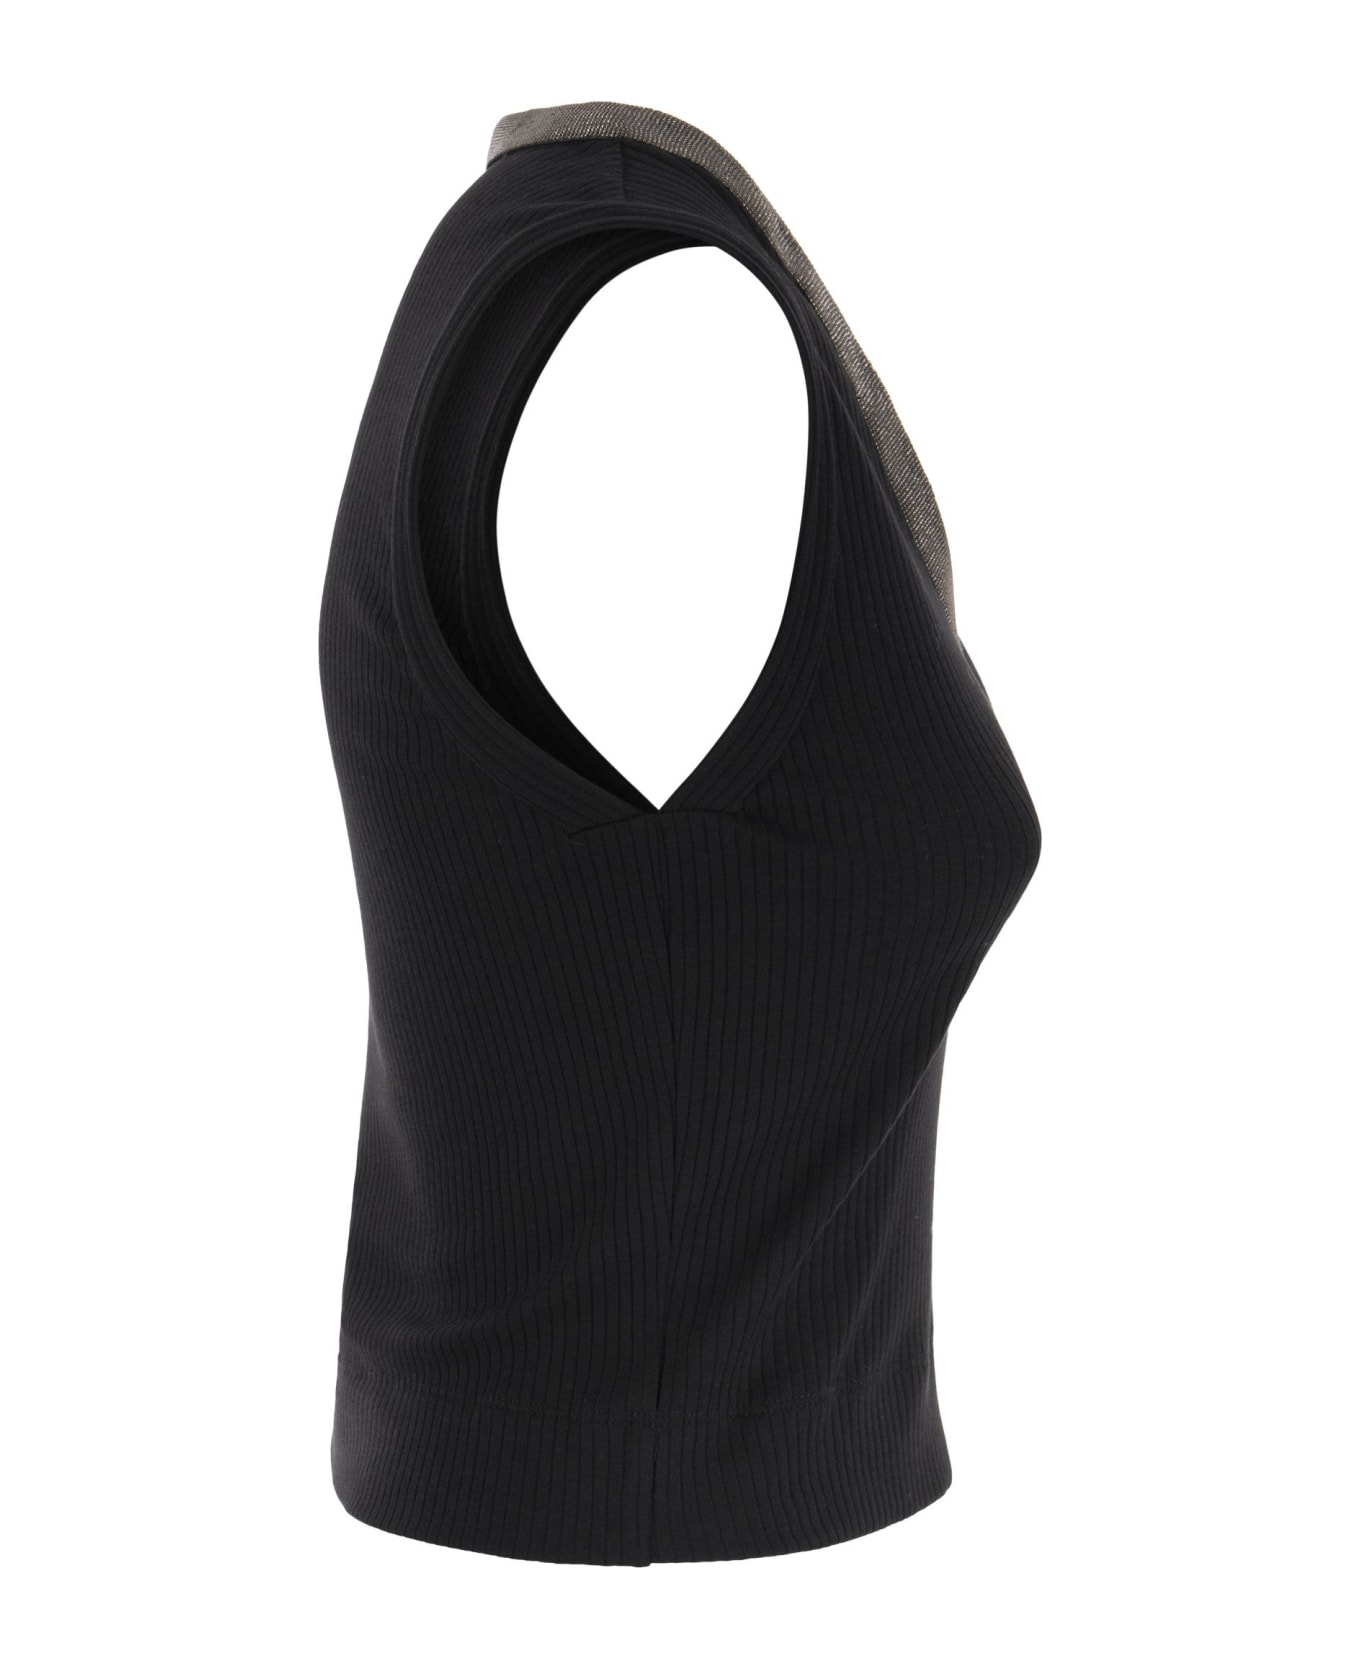 Brunello Cucinelli Stretch Cotton Rib Jersey Top With Shiny Collar - Black ベスト